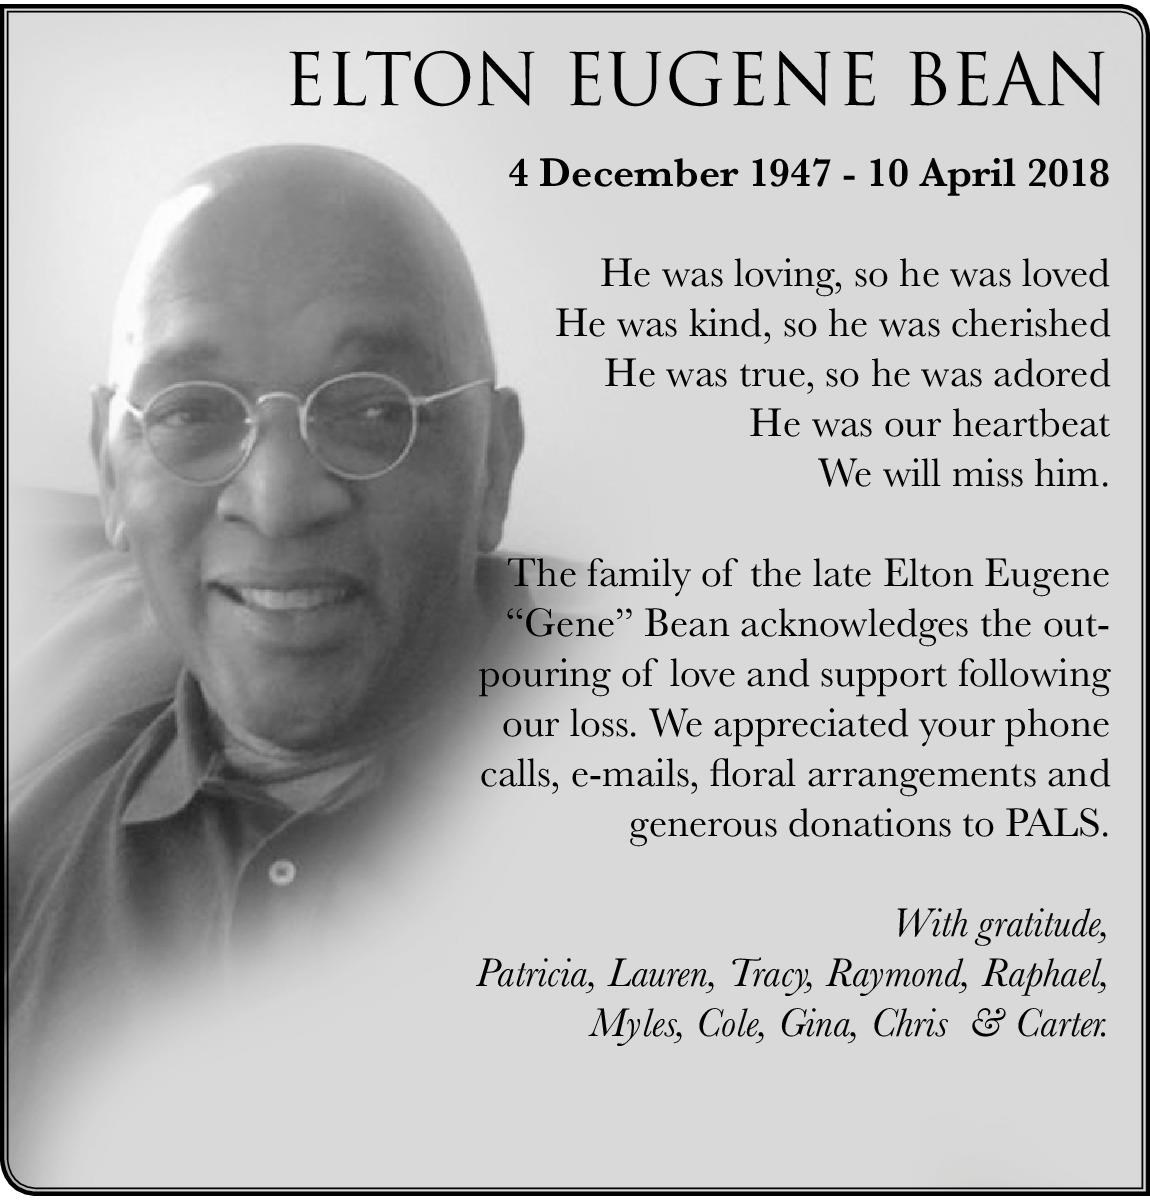 Elton Eugene Bean obituary